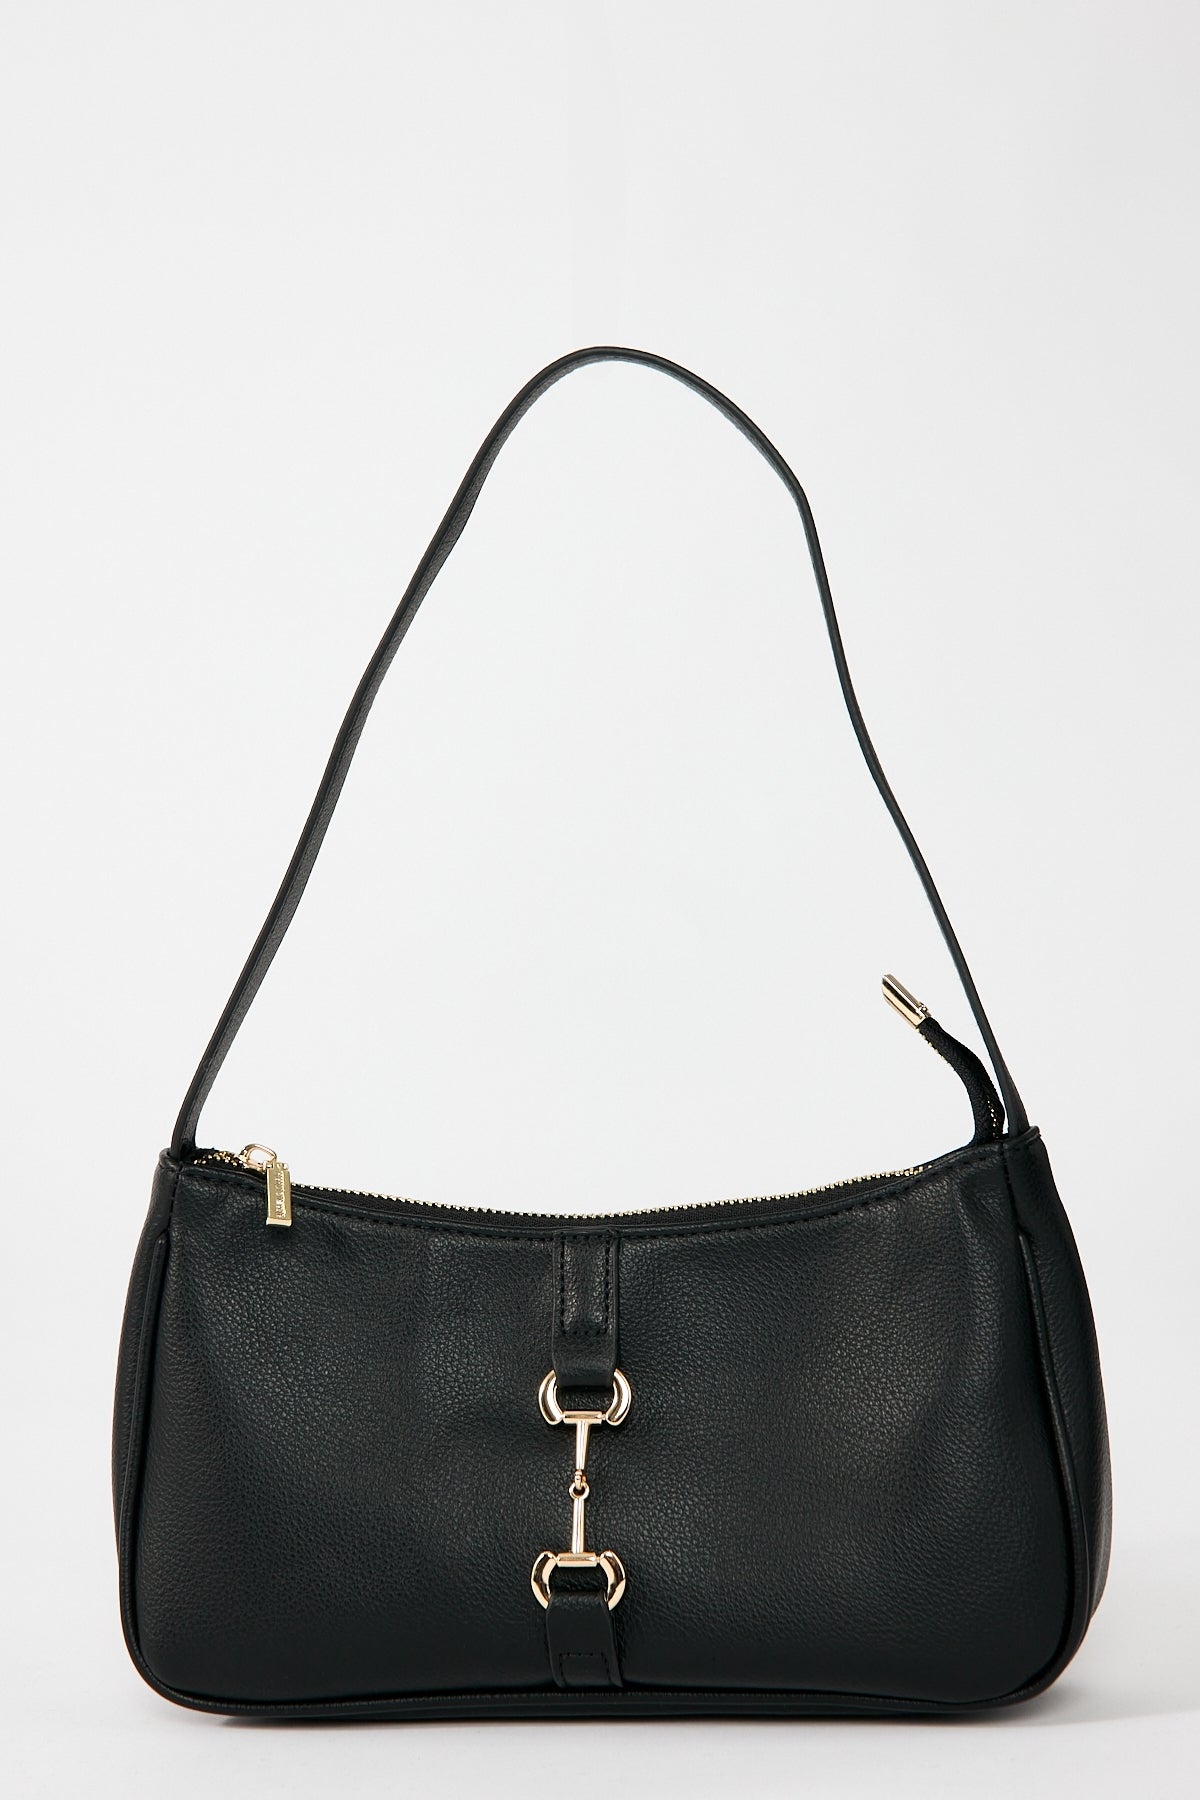 Perfect Stranger Rosa Handbag Black